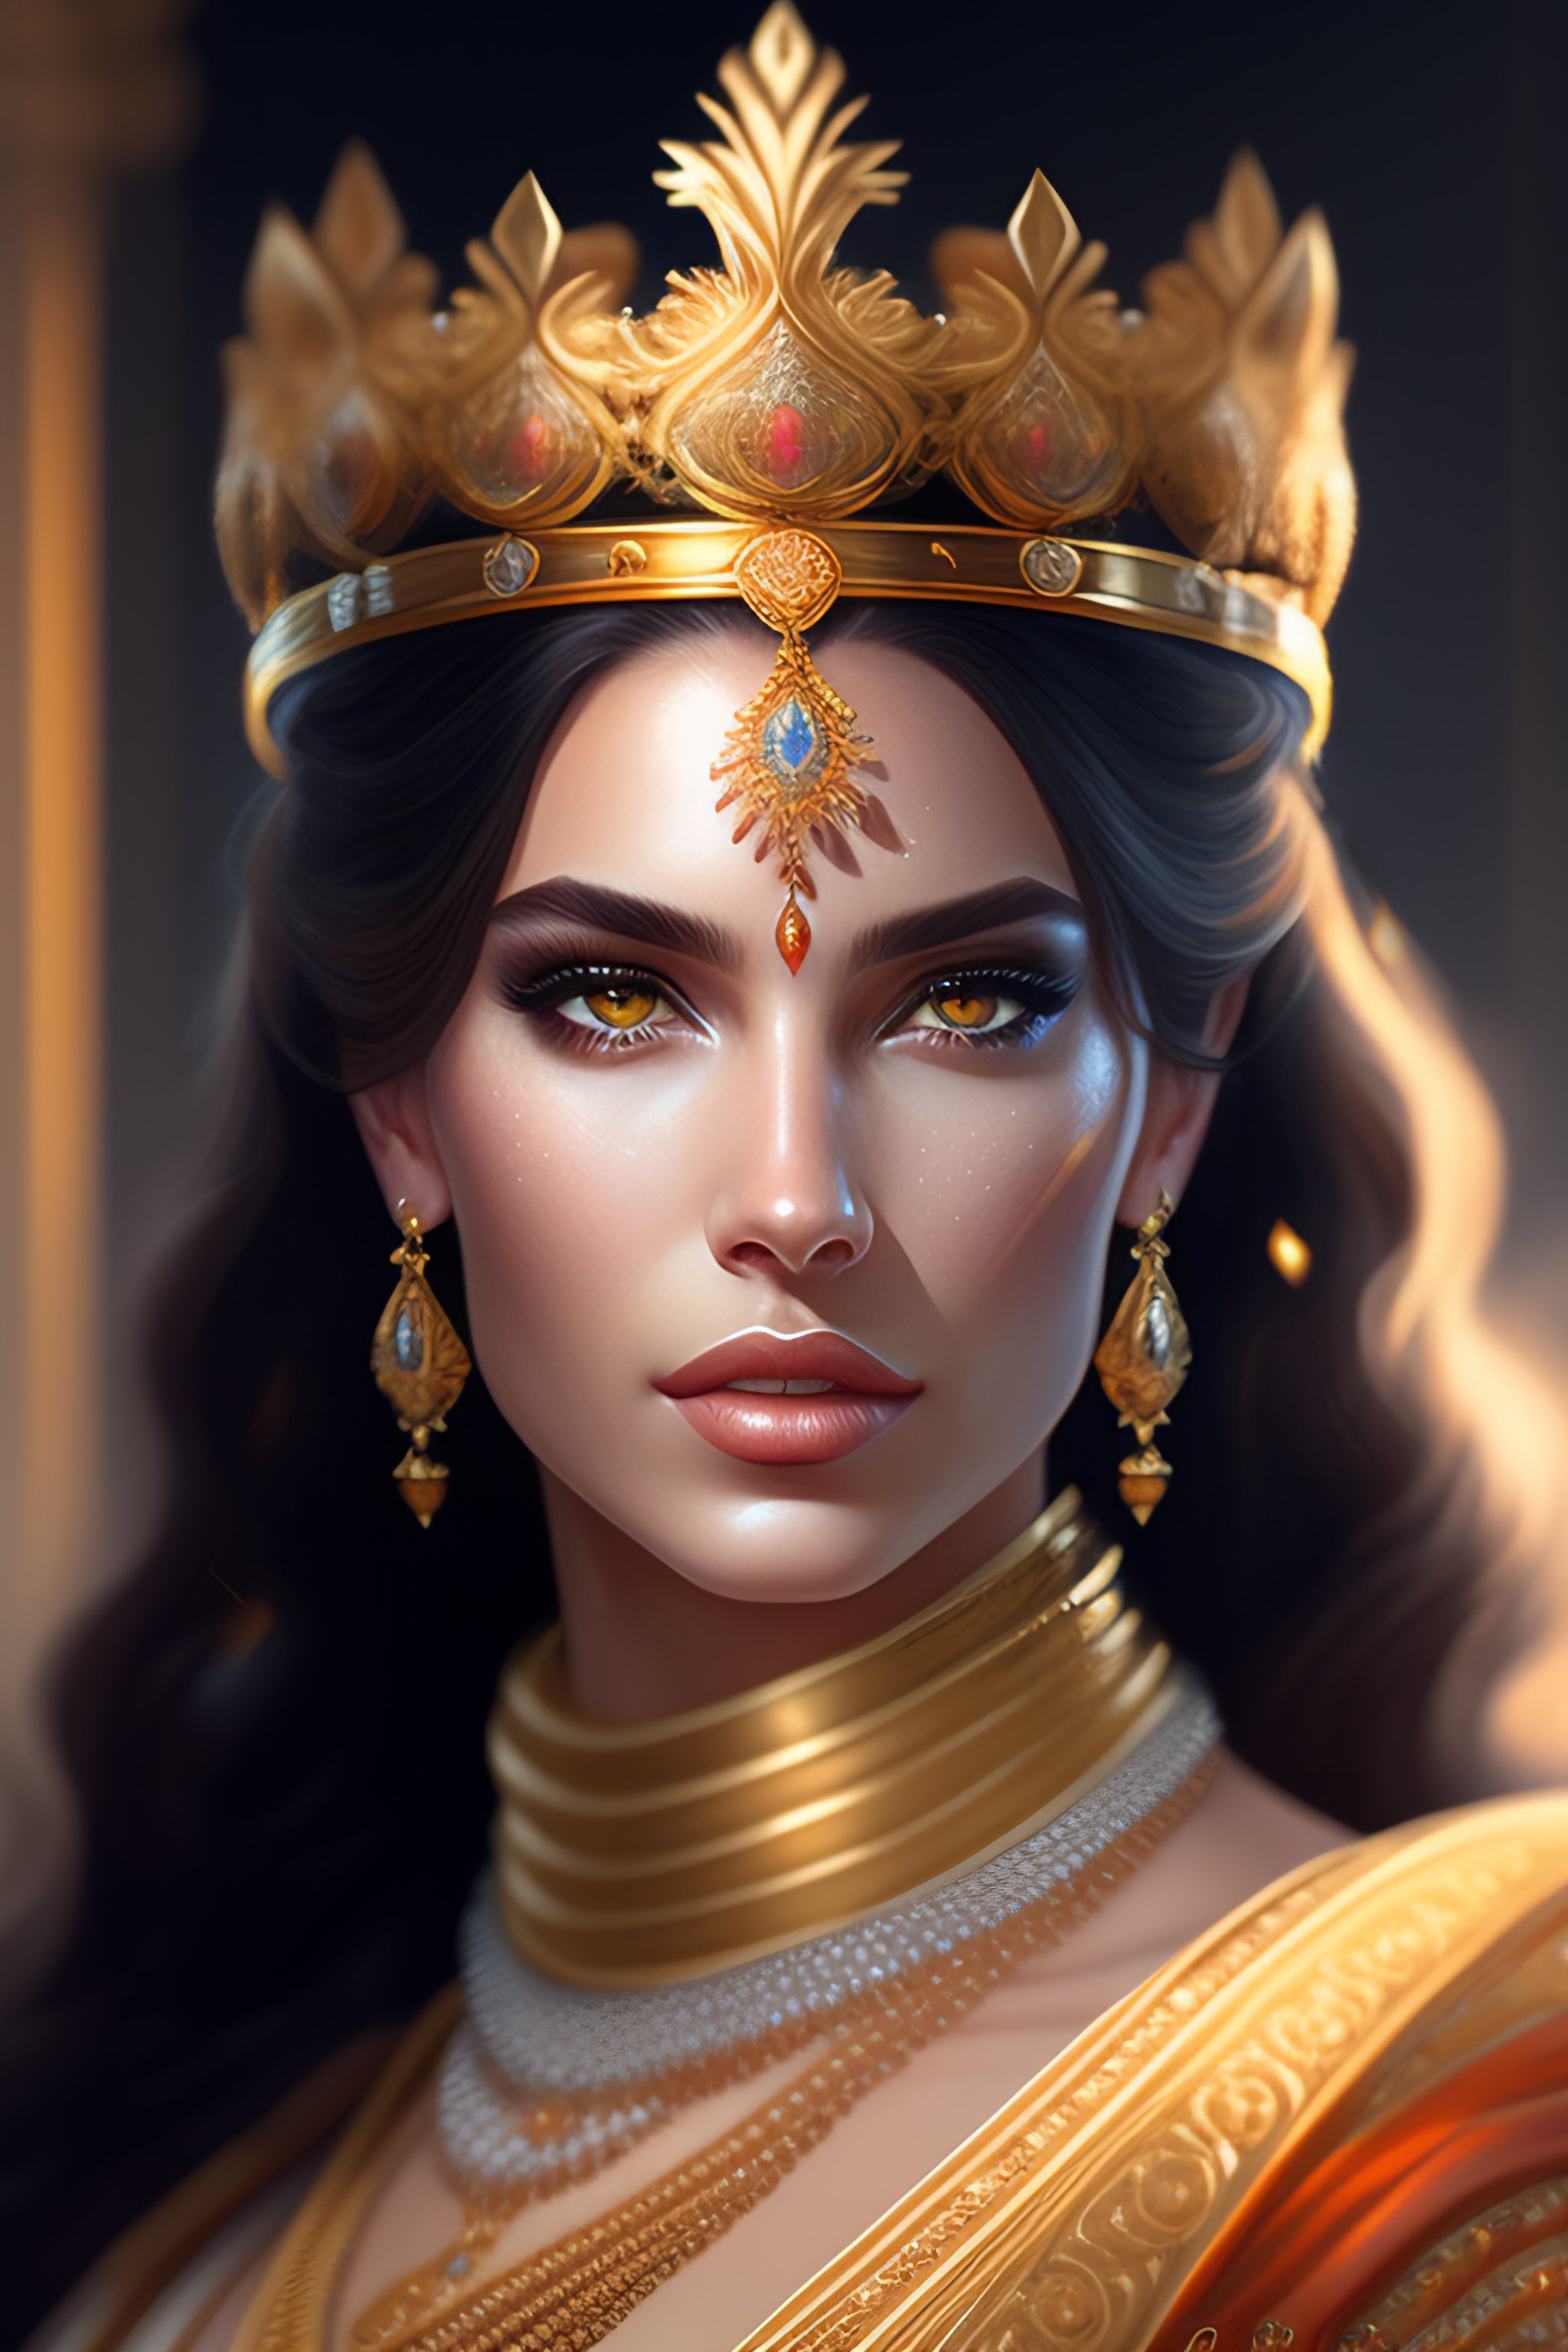 Lexica - Highly detailed portrait of an elegant goddess, ornate crown ...